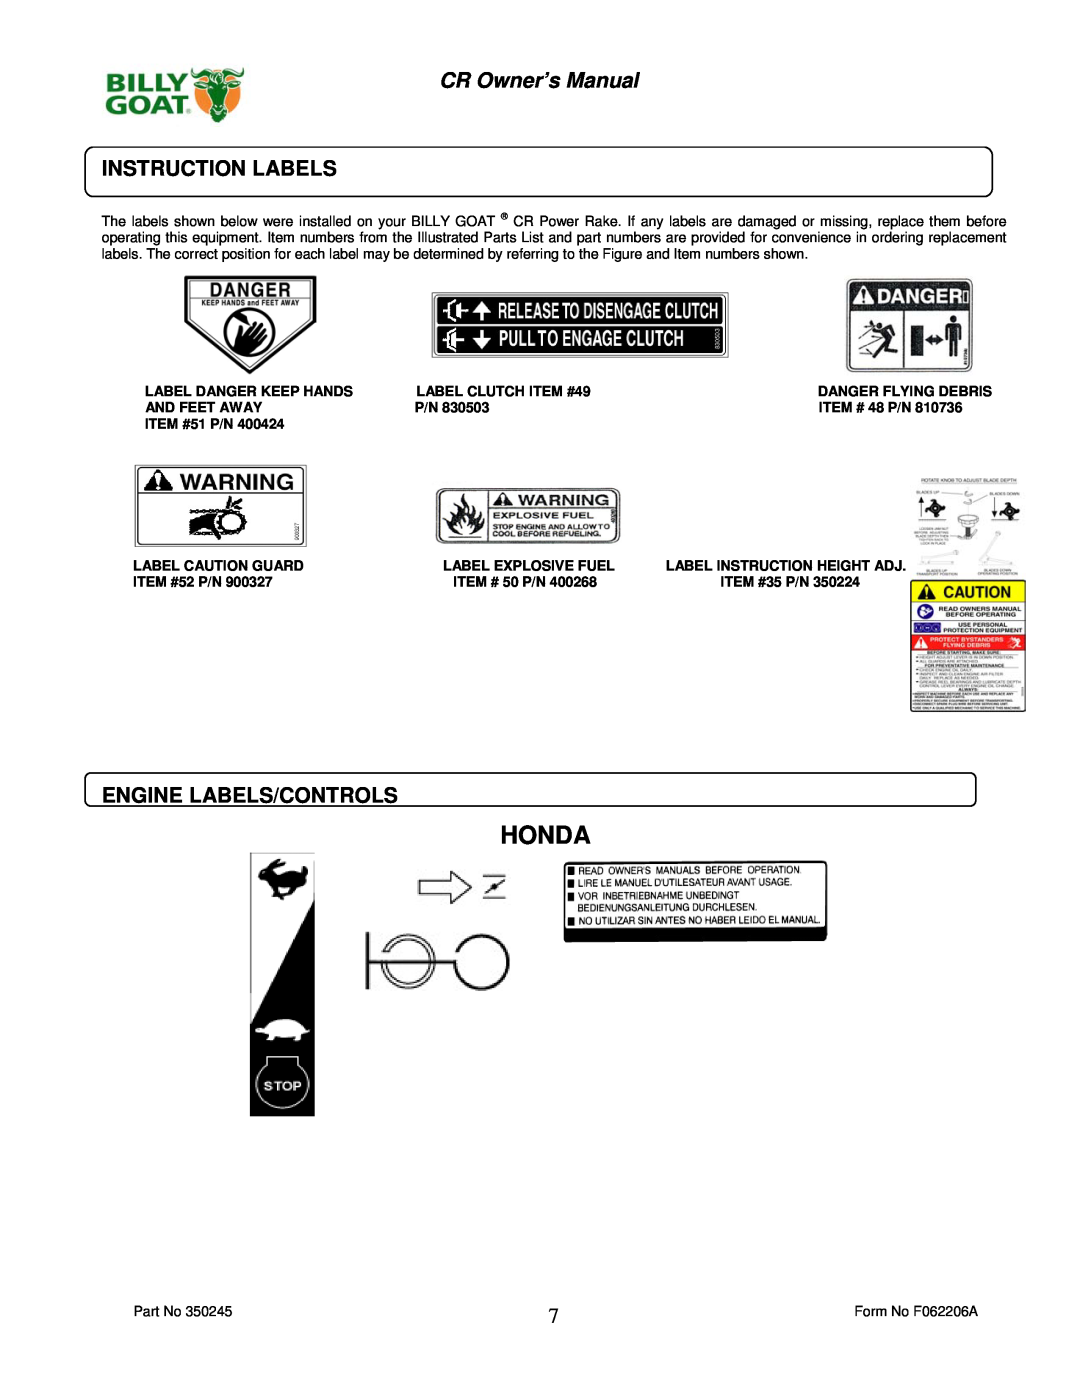 Billy Goat CR550HC owner manual Honda, Instruction Labels, Engine Labels/Controls 